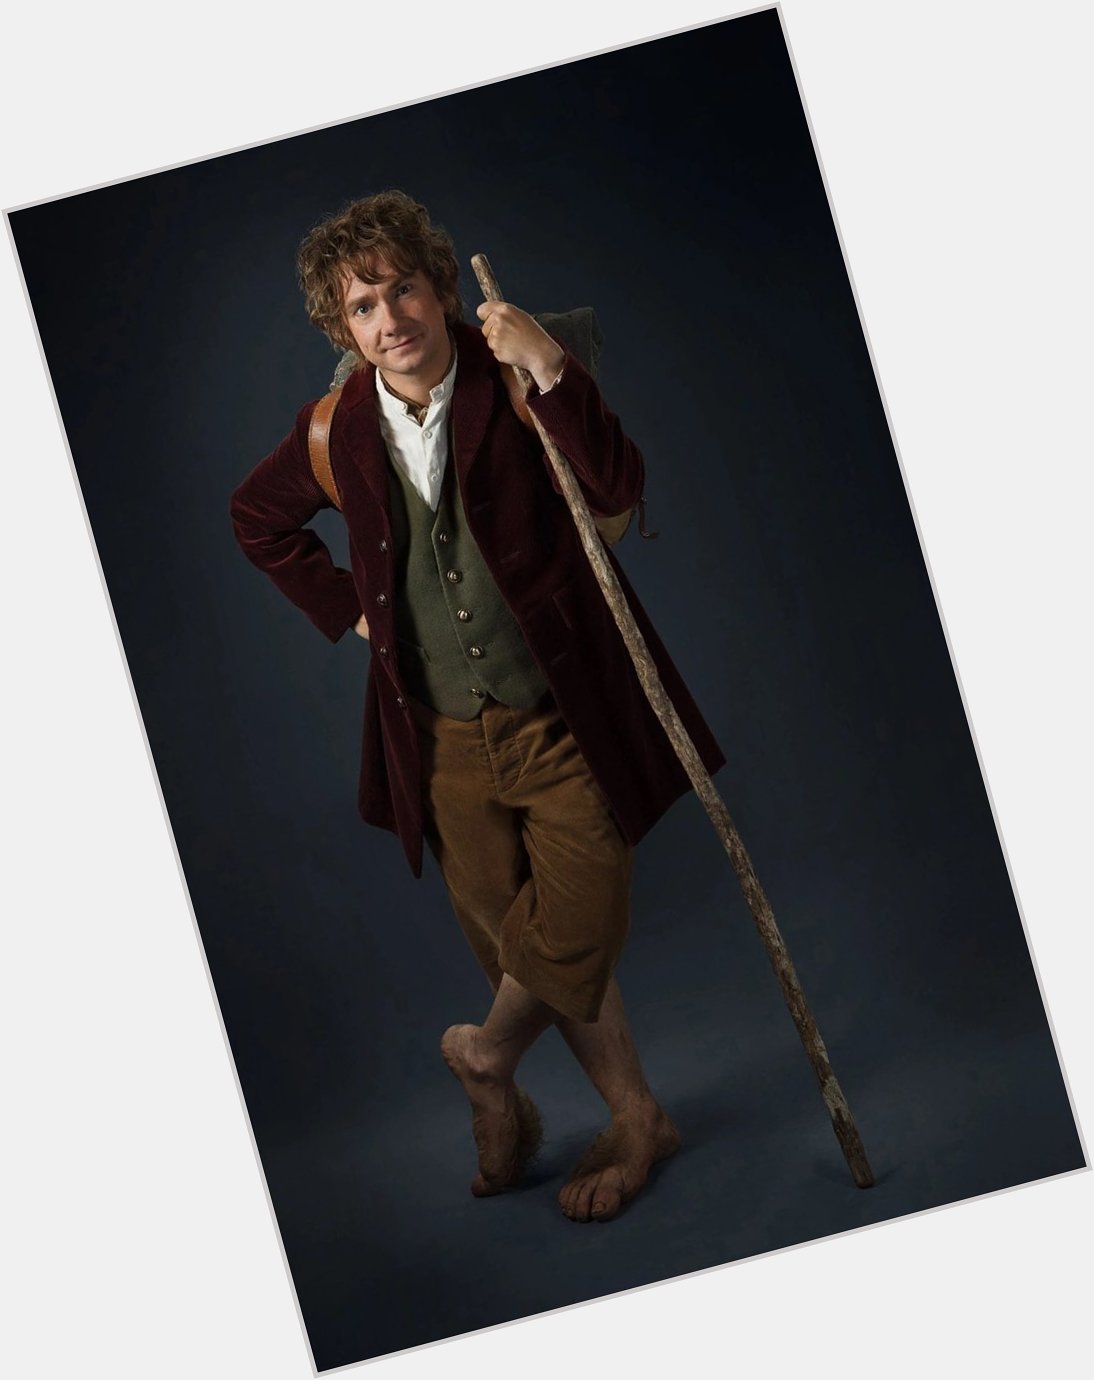 Happy 50th Birthday to Bilbo Baggins in the Hobbit trilogy himself - Martin Freeman. 